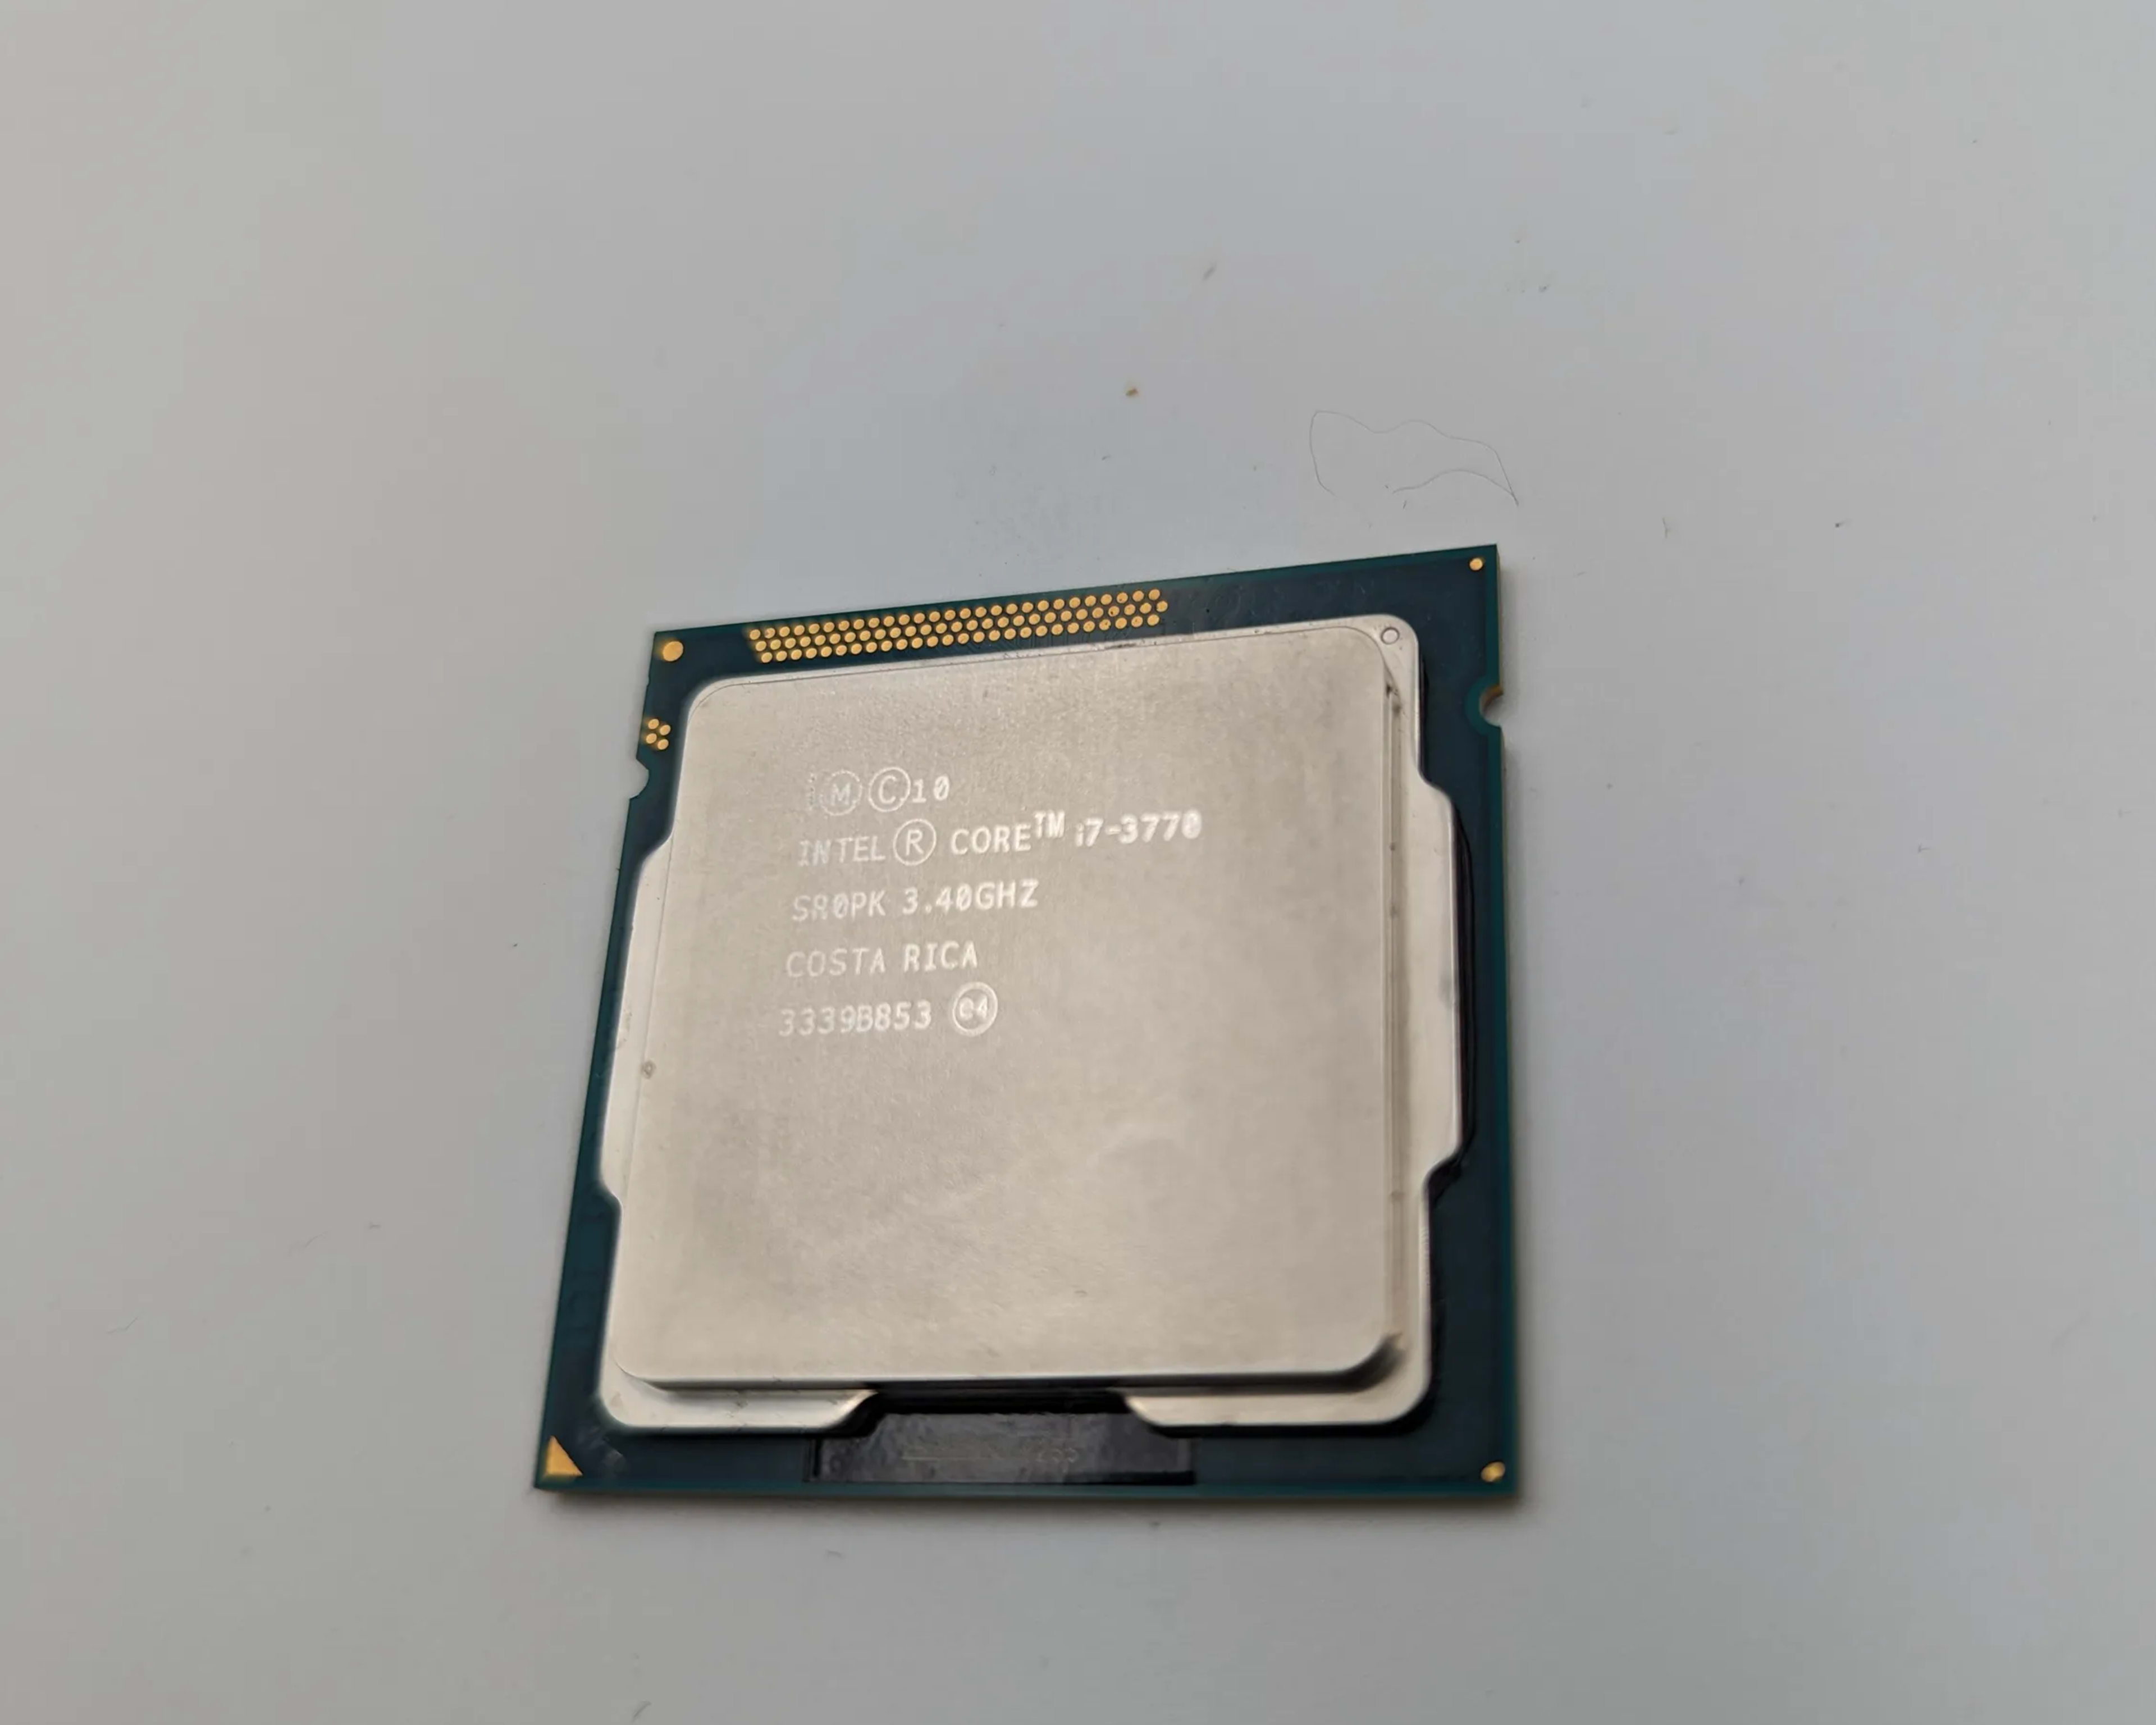 i7-3770 @ 3.4 ghz CPU. LGA 1155